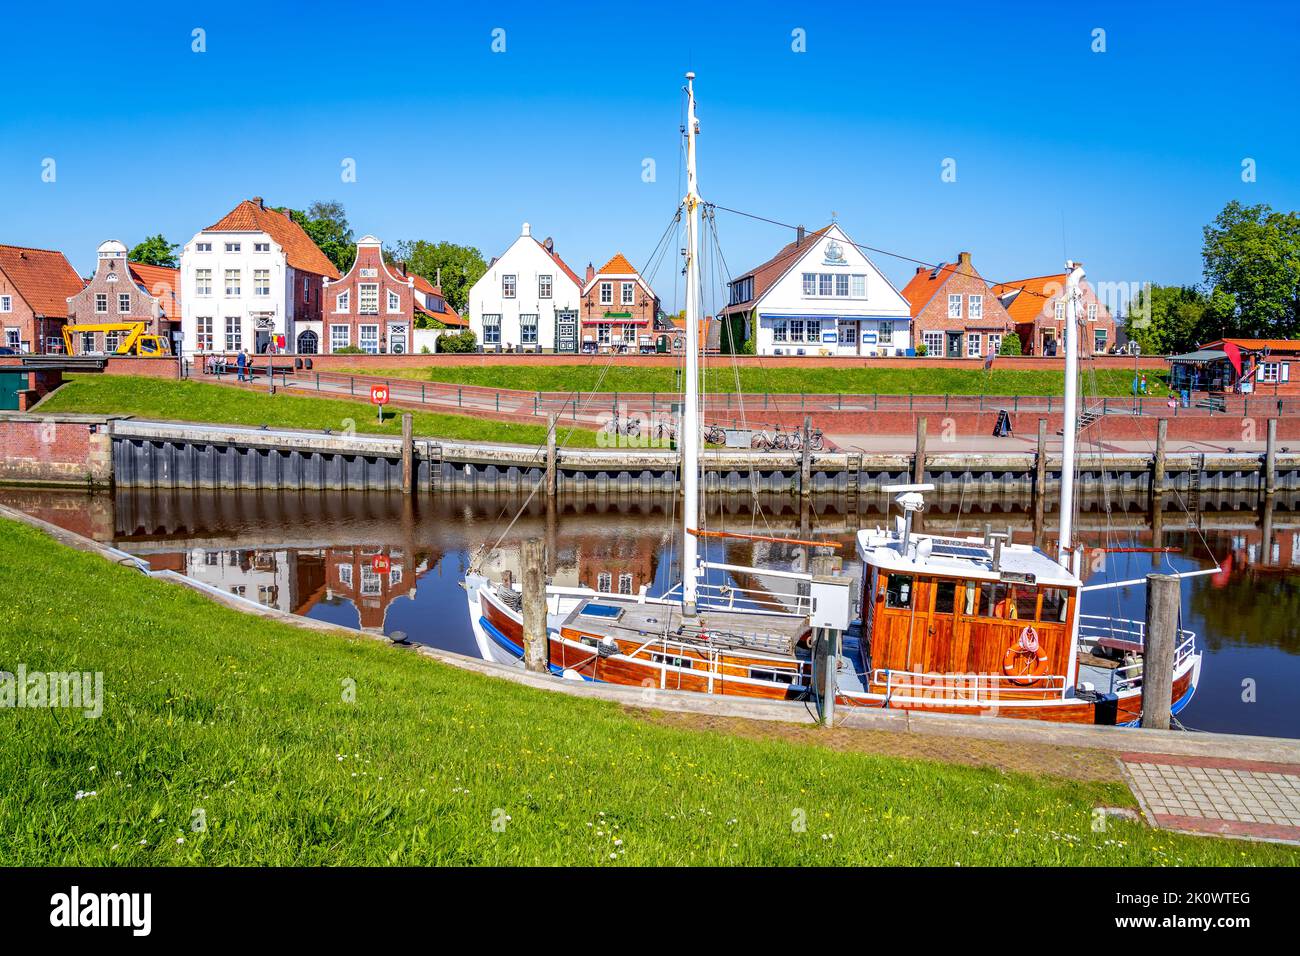 Marina, Greetsiel, Krummhoern, North Sea, Germany Stock Photo